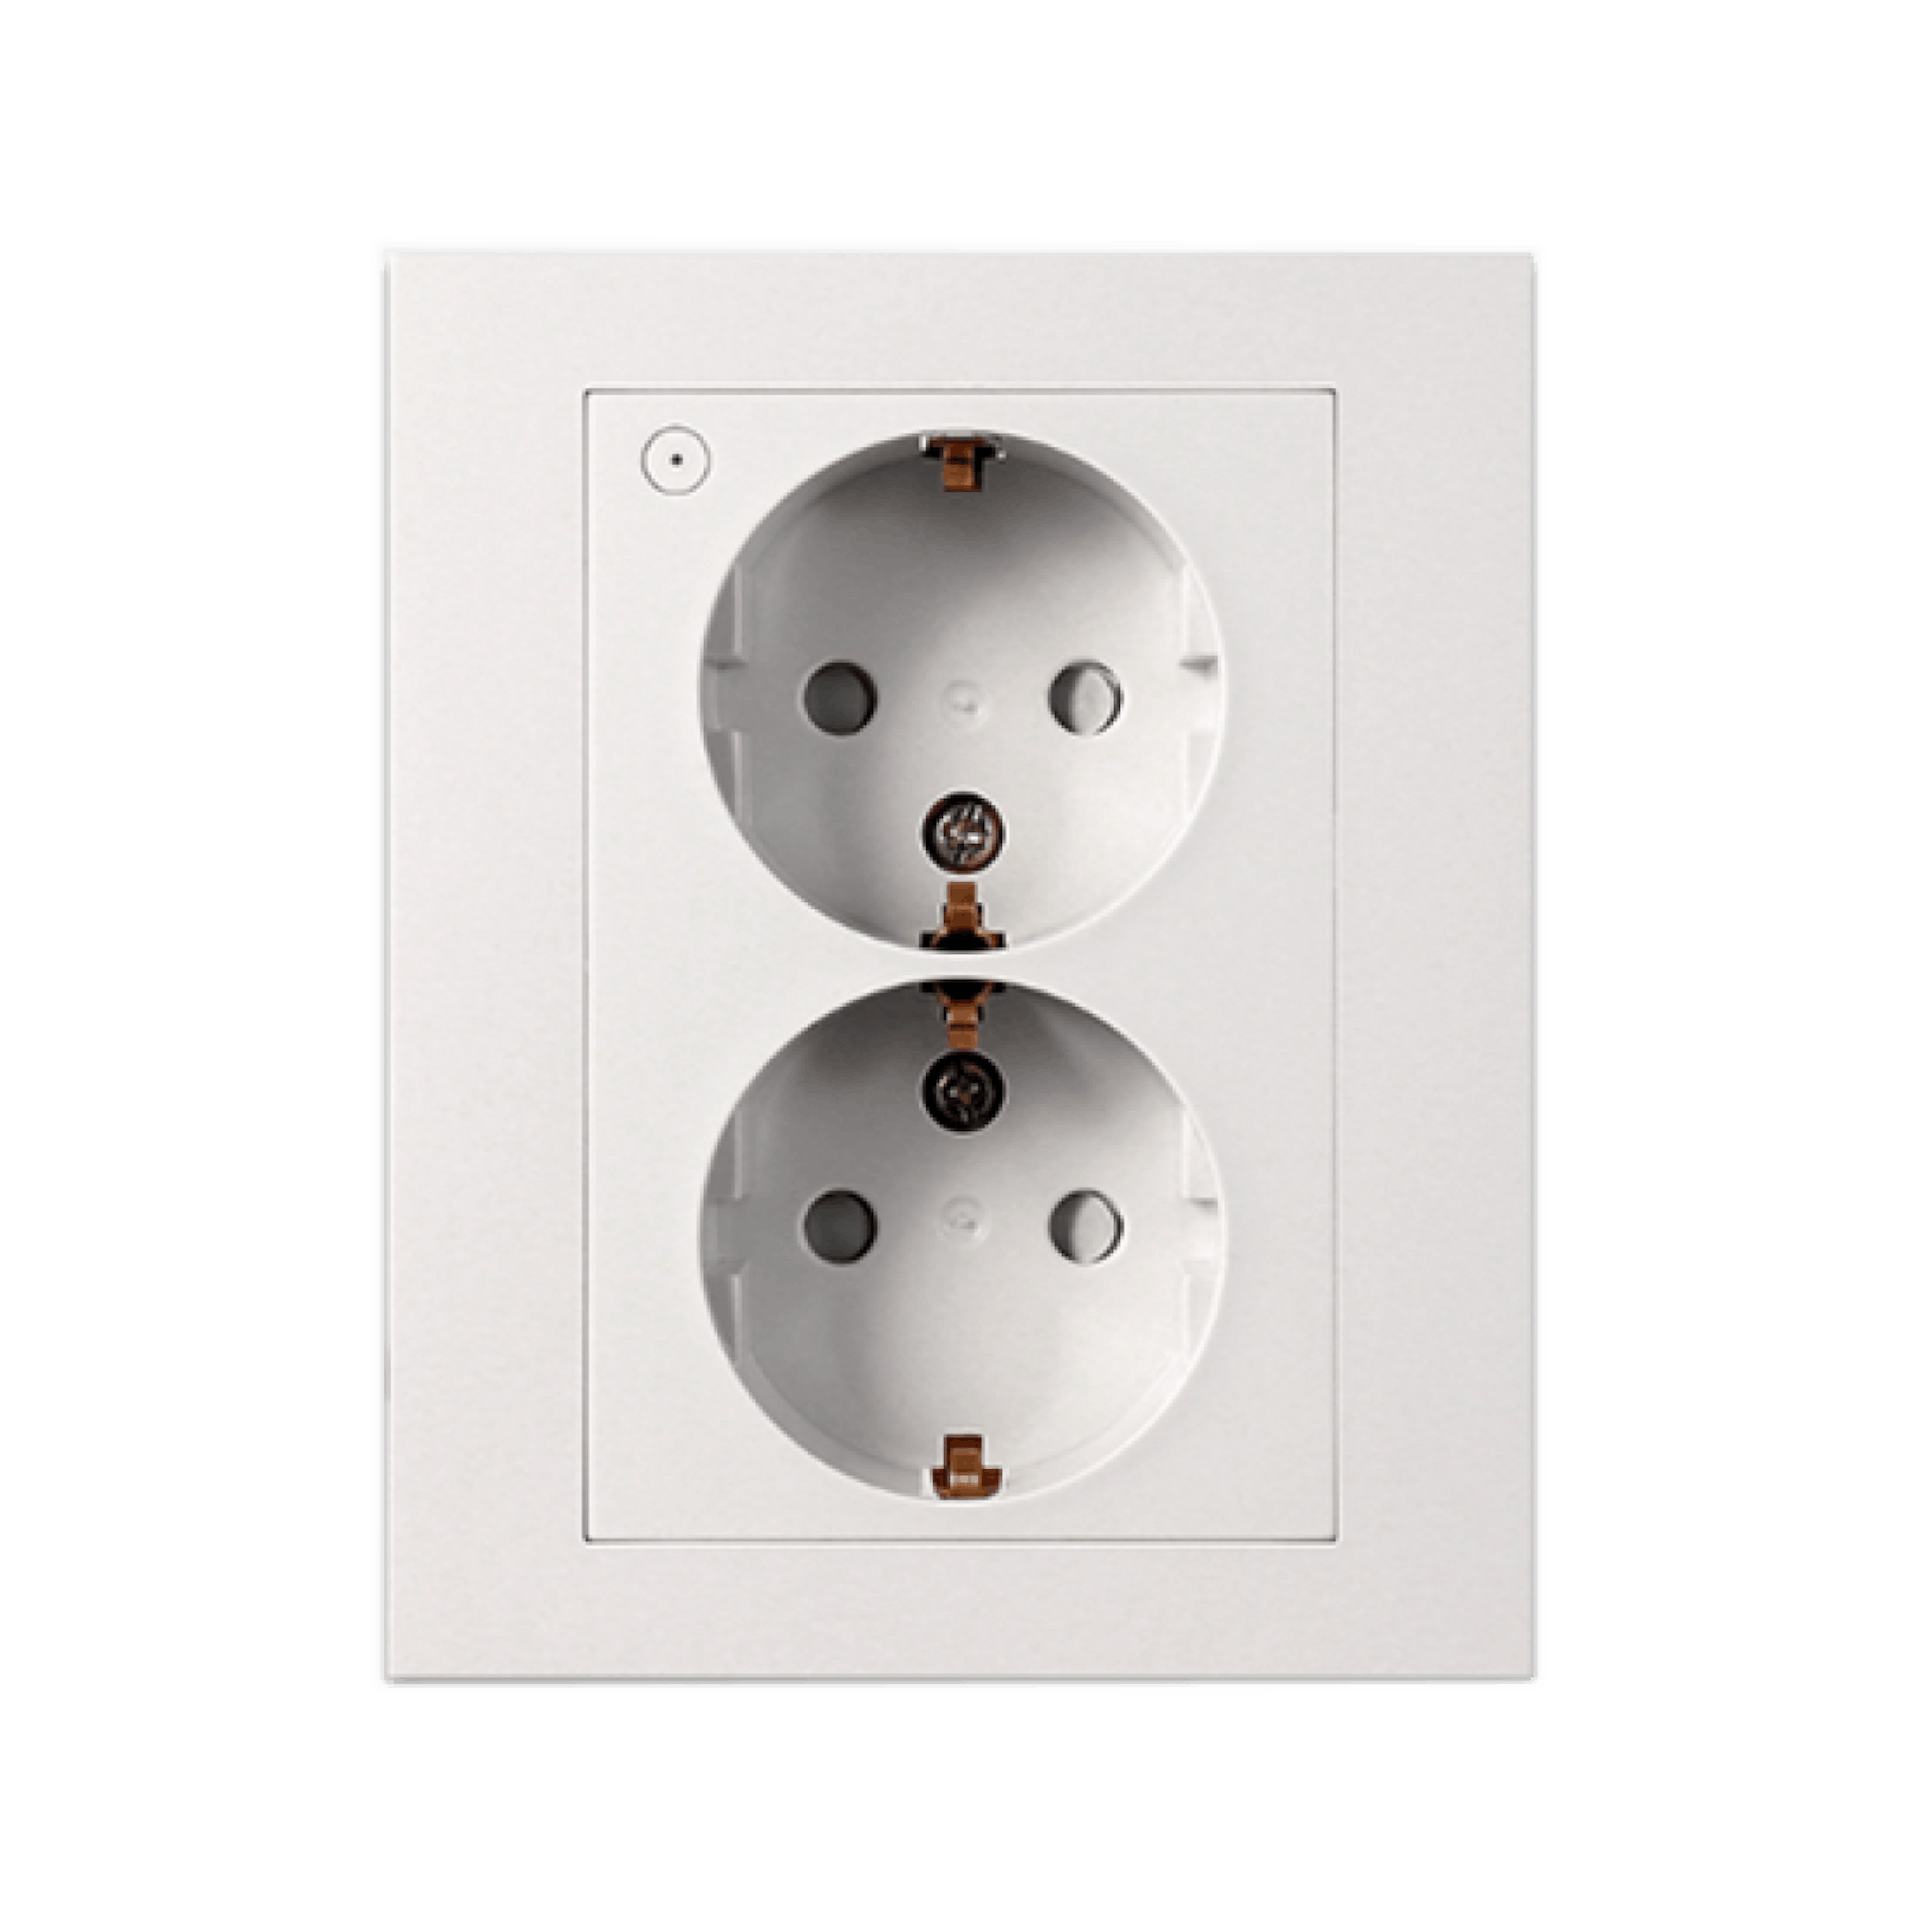 Futurehome - Smart socket - Low profile White - Image 2